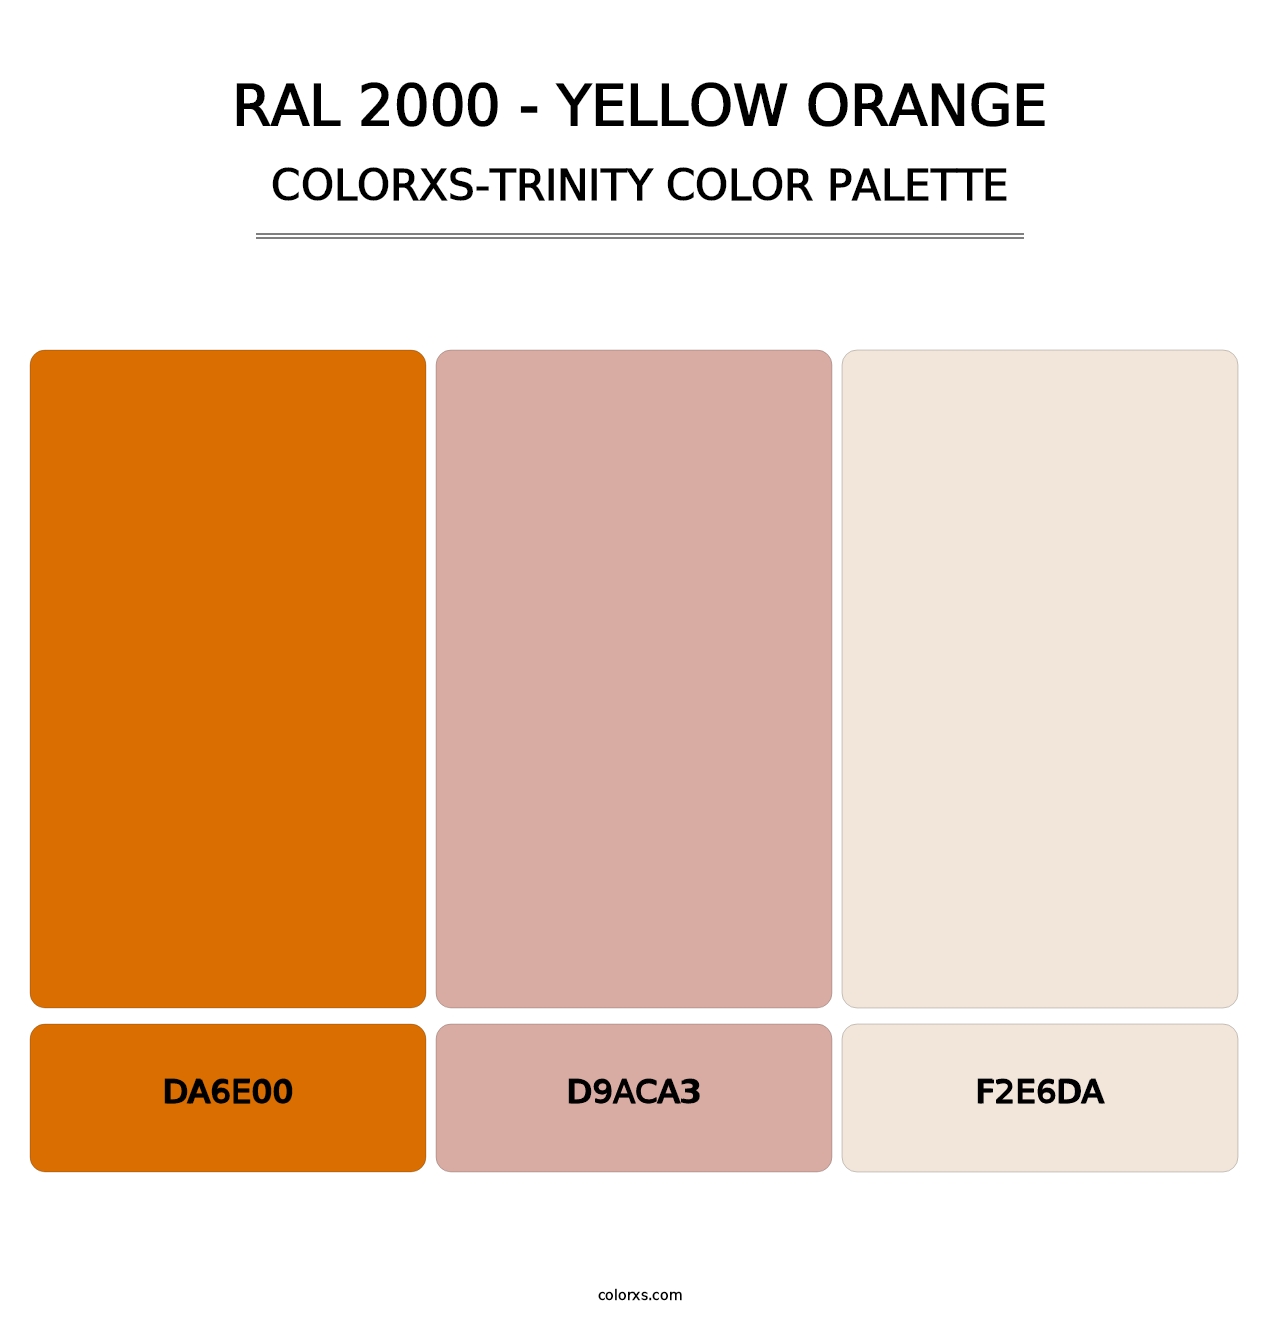 RAL 2000 - Yellow Orange - Colorxs Trinity Palette